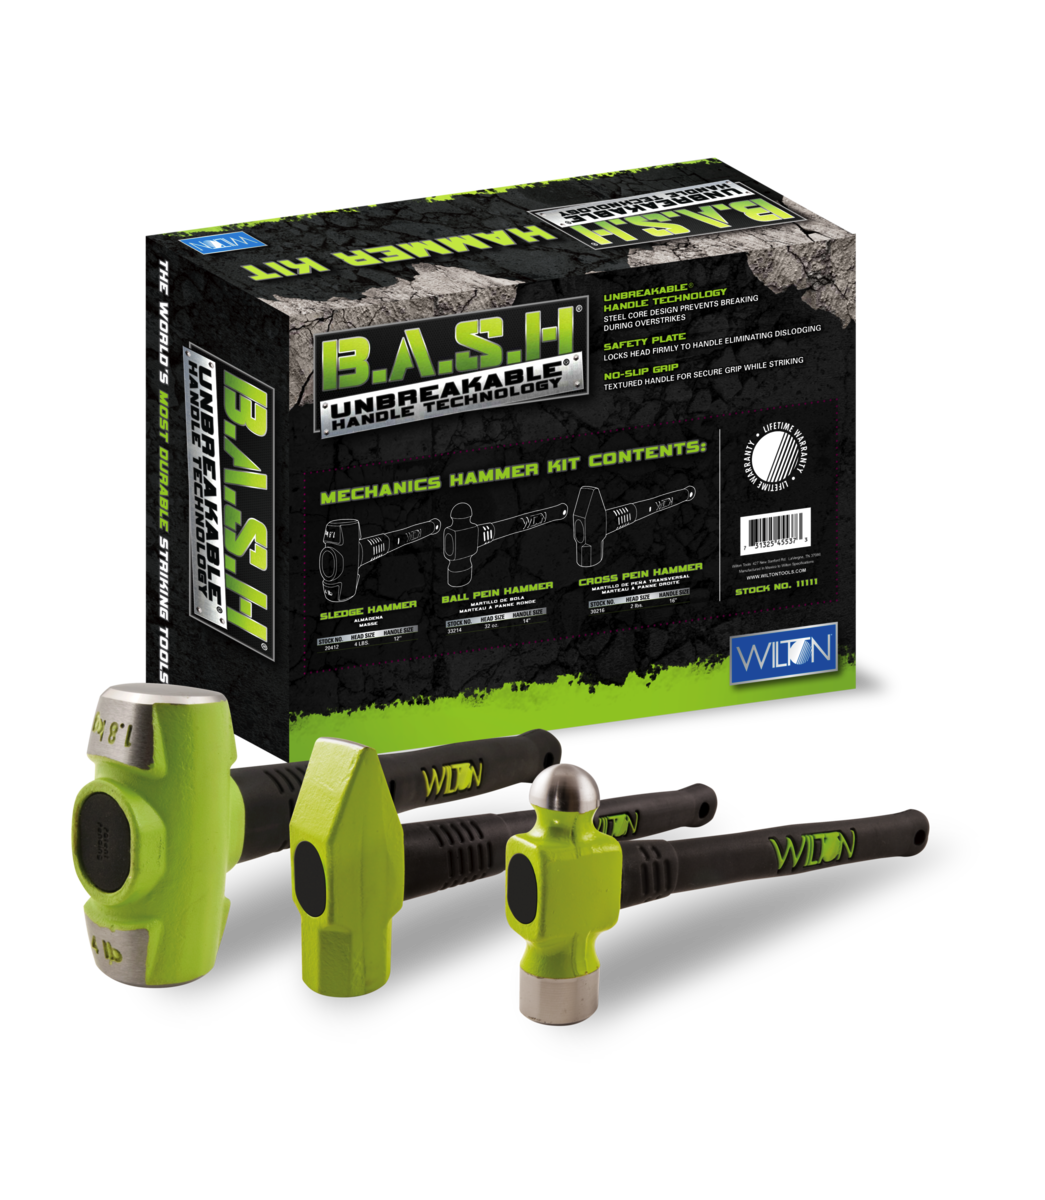 B.A.S.H® Mechanics Hammer Kit